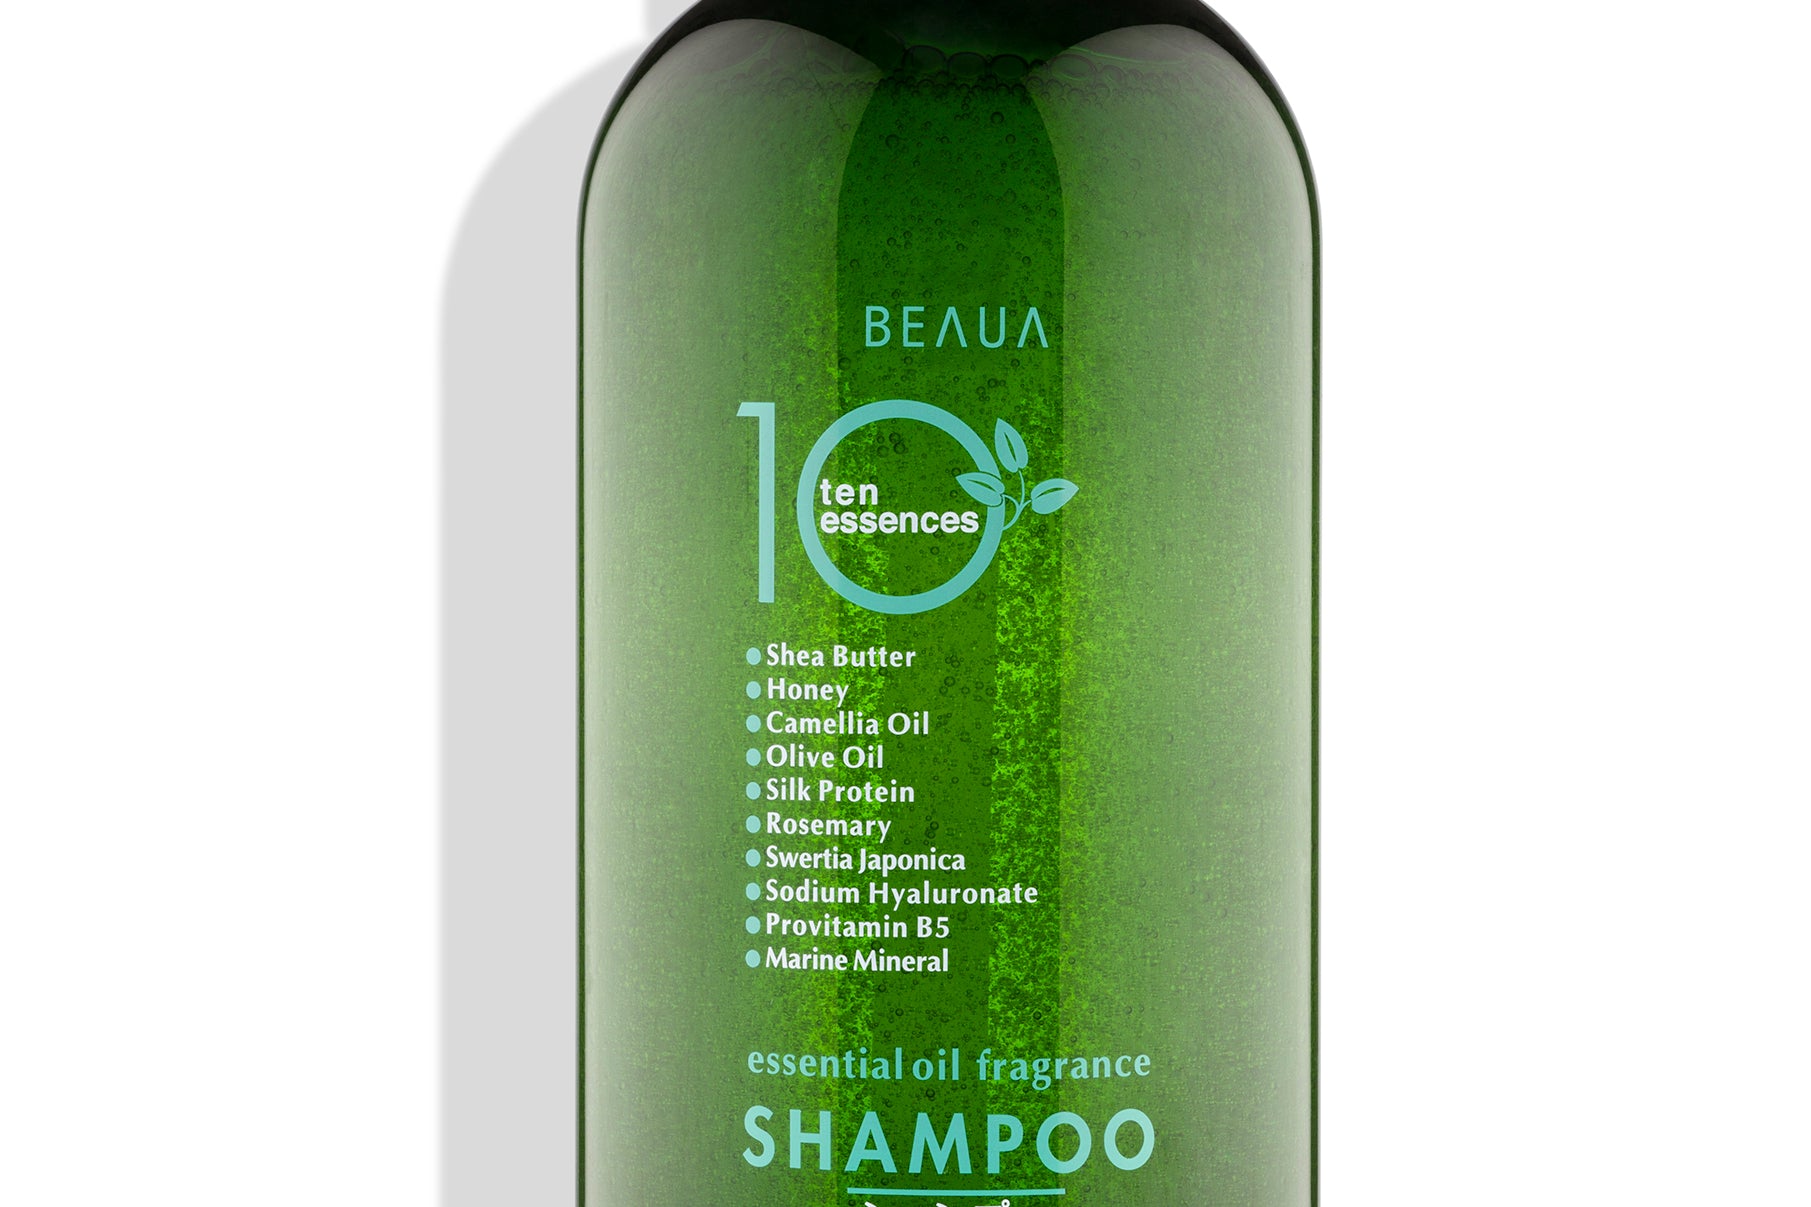 beaua 10 essences szampon opinie